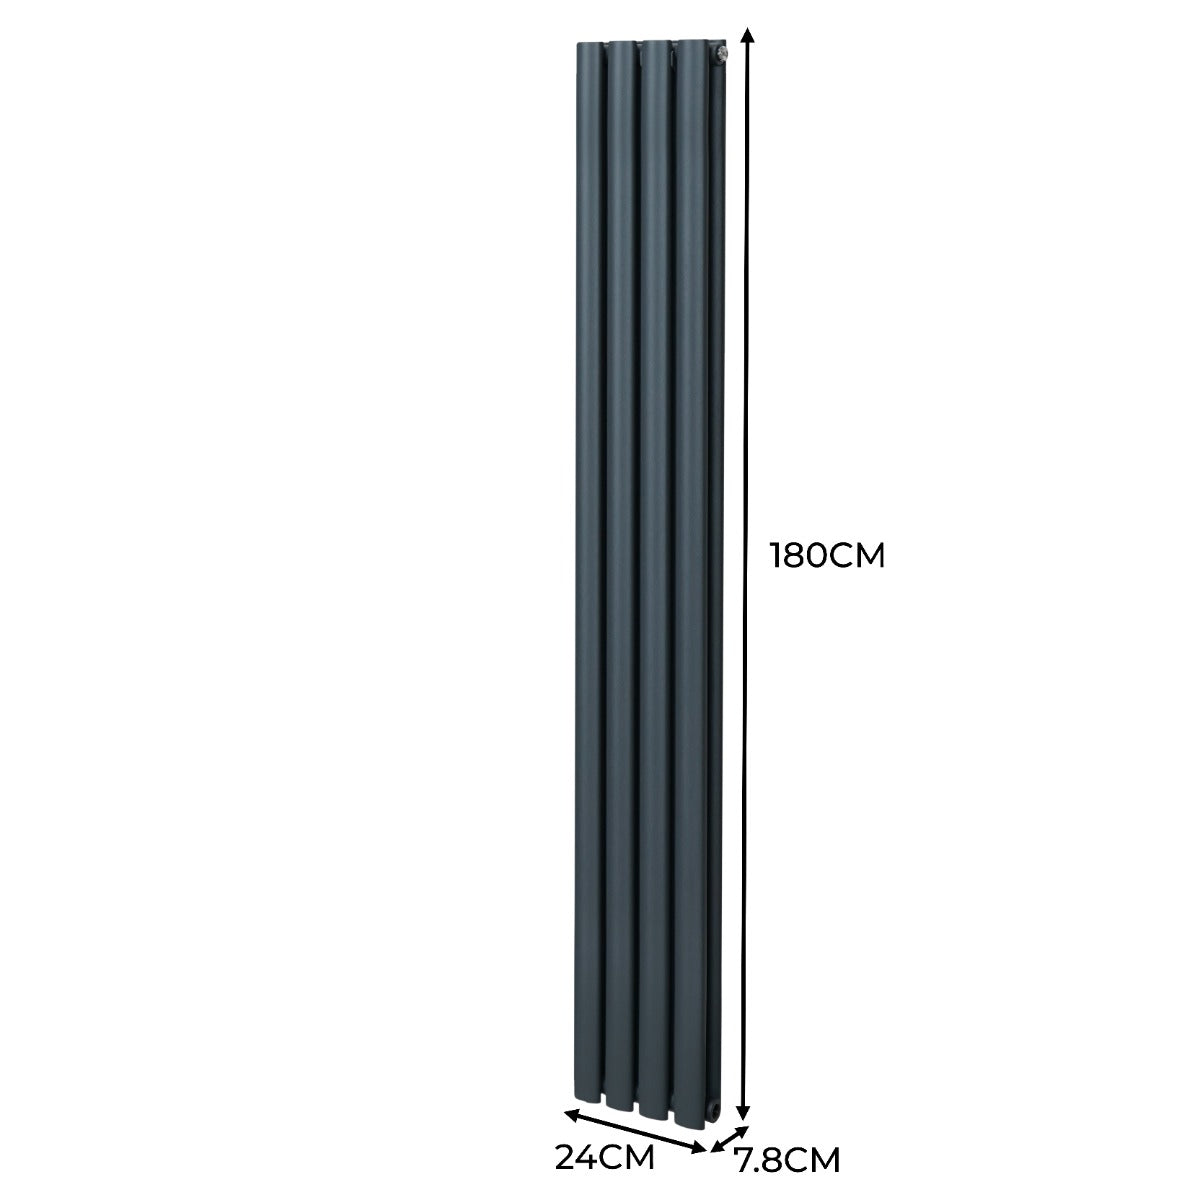 Radiador De Columna Ovalada - 1800mm x 240mm - Gris Antracita